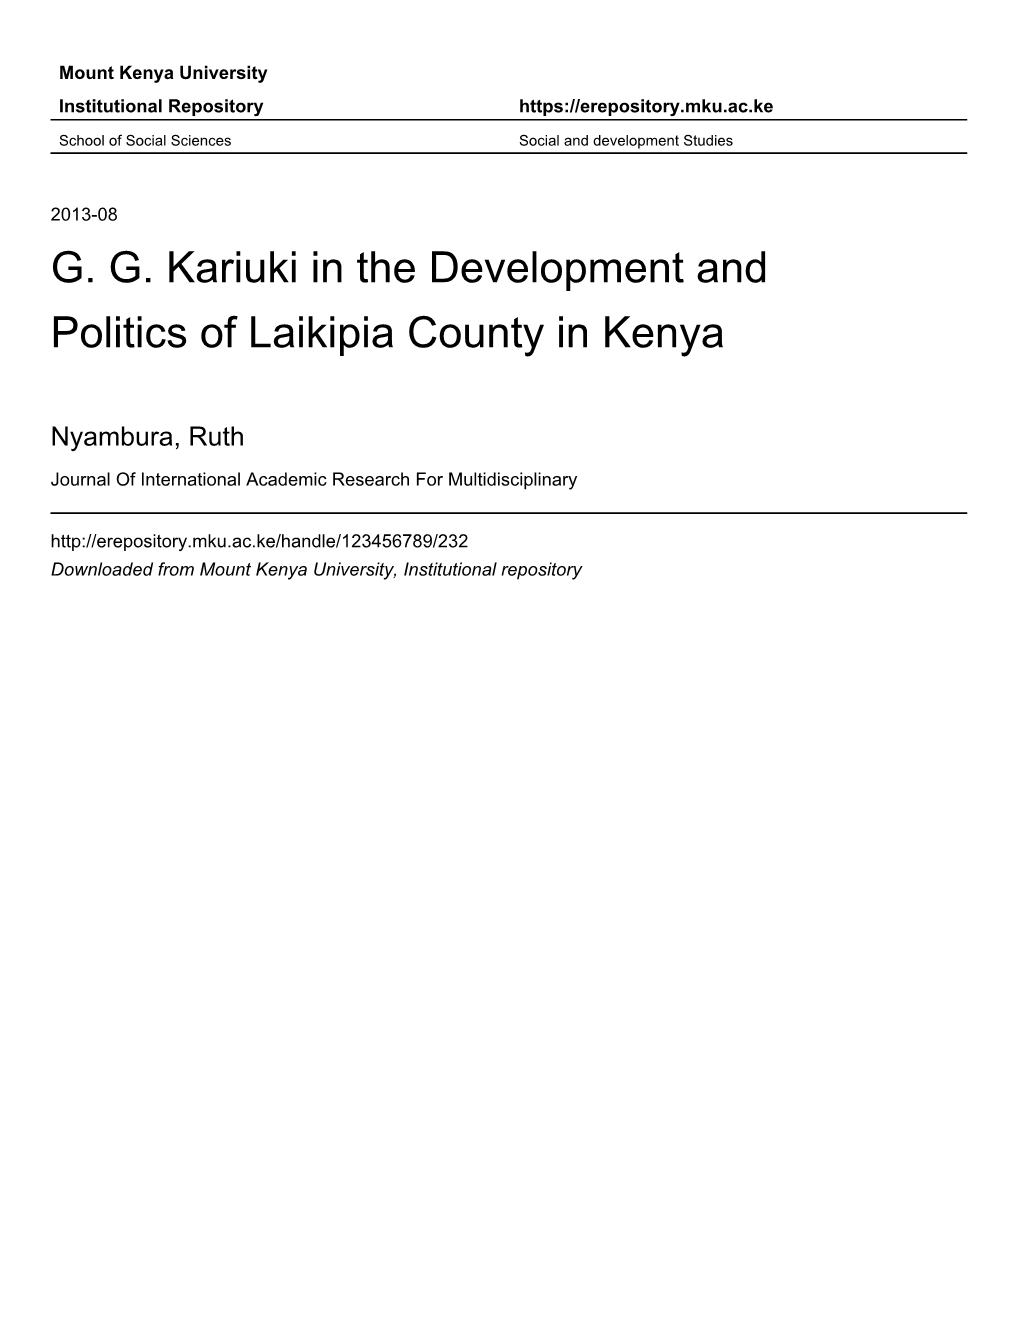 G. G. Kariuki in the Development and Politics of Laikipia County in Kenya